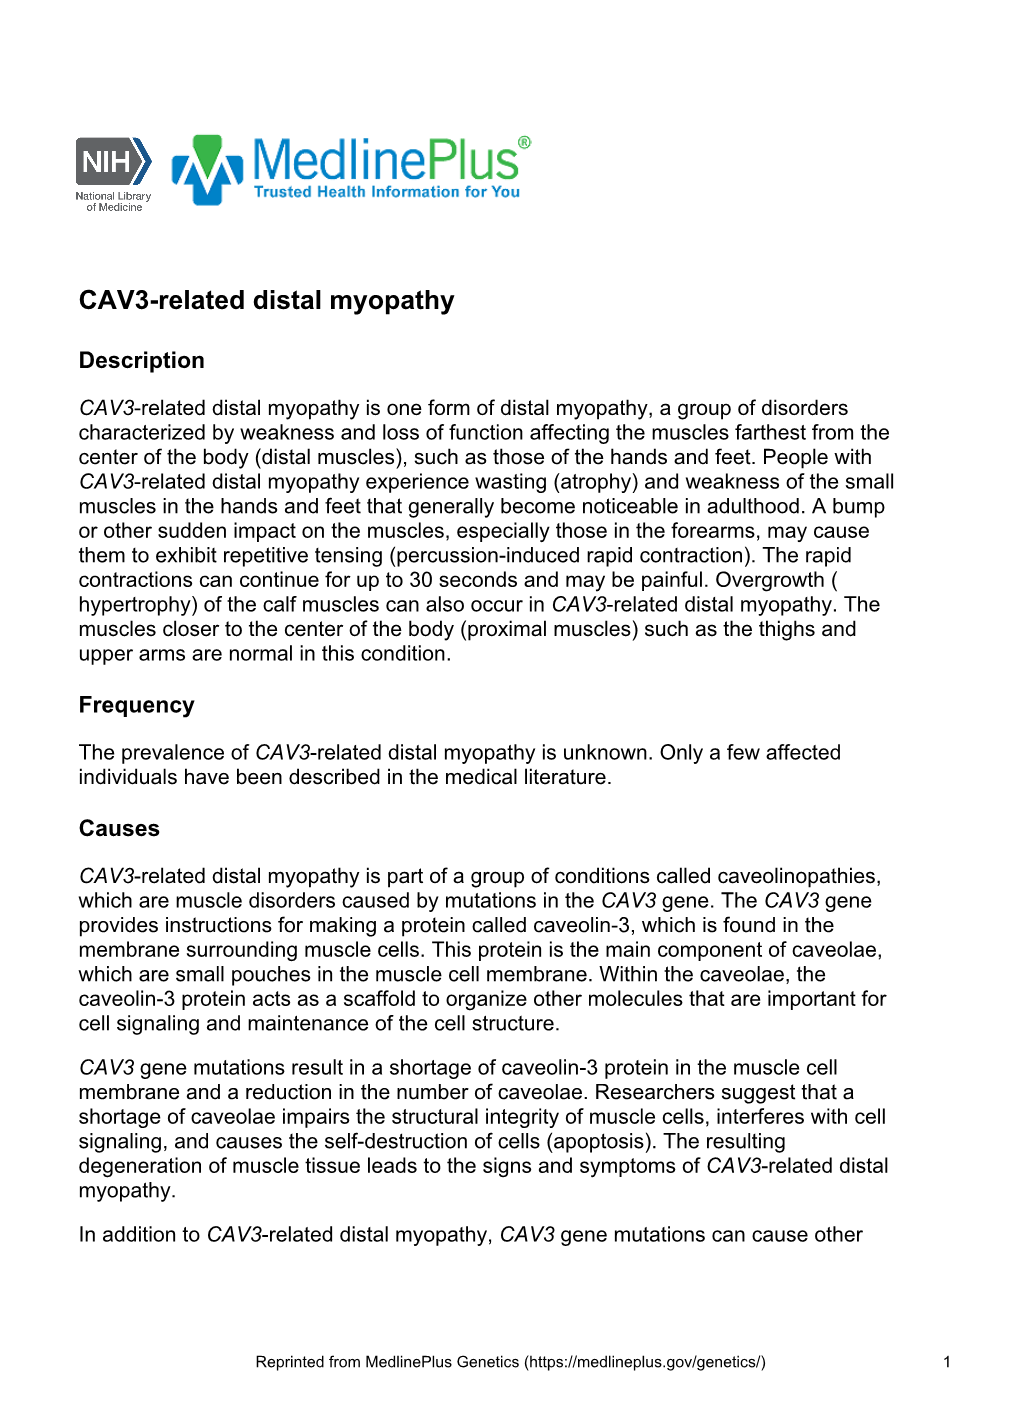 CAV3-Related Distal Myopathy